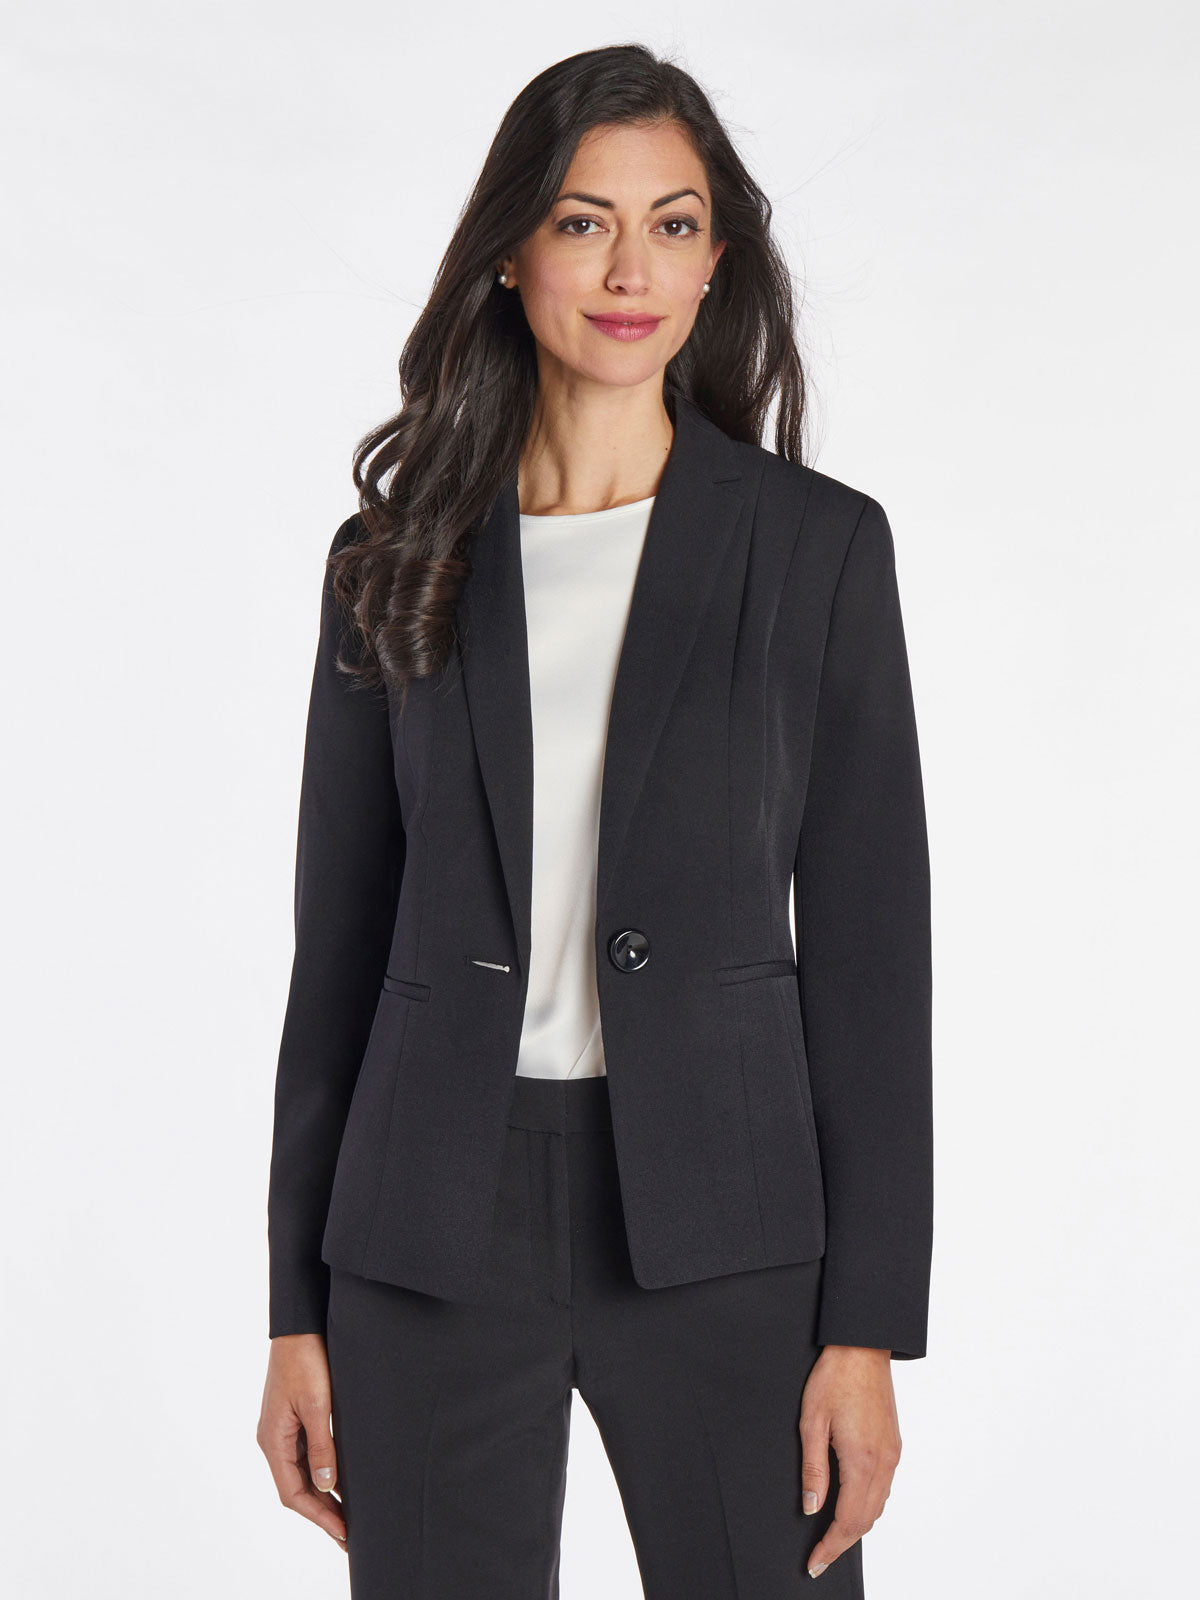 KASPER Separates Womens Size 4 Long Sleeve Black Blazer Suit